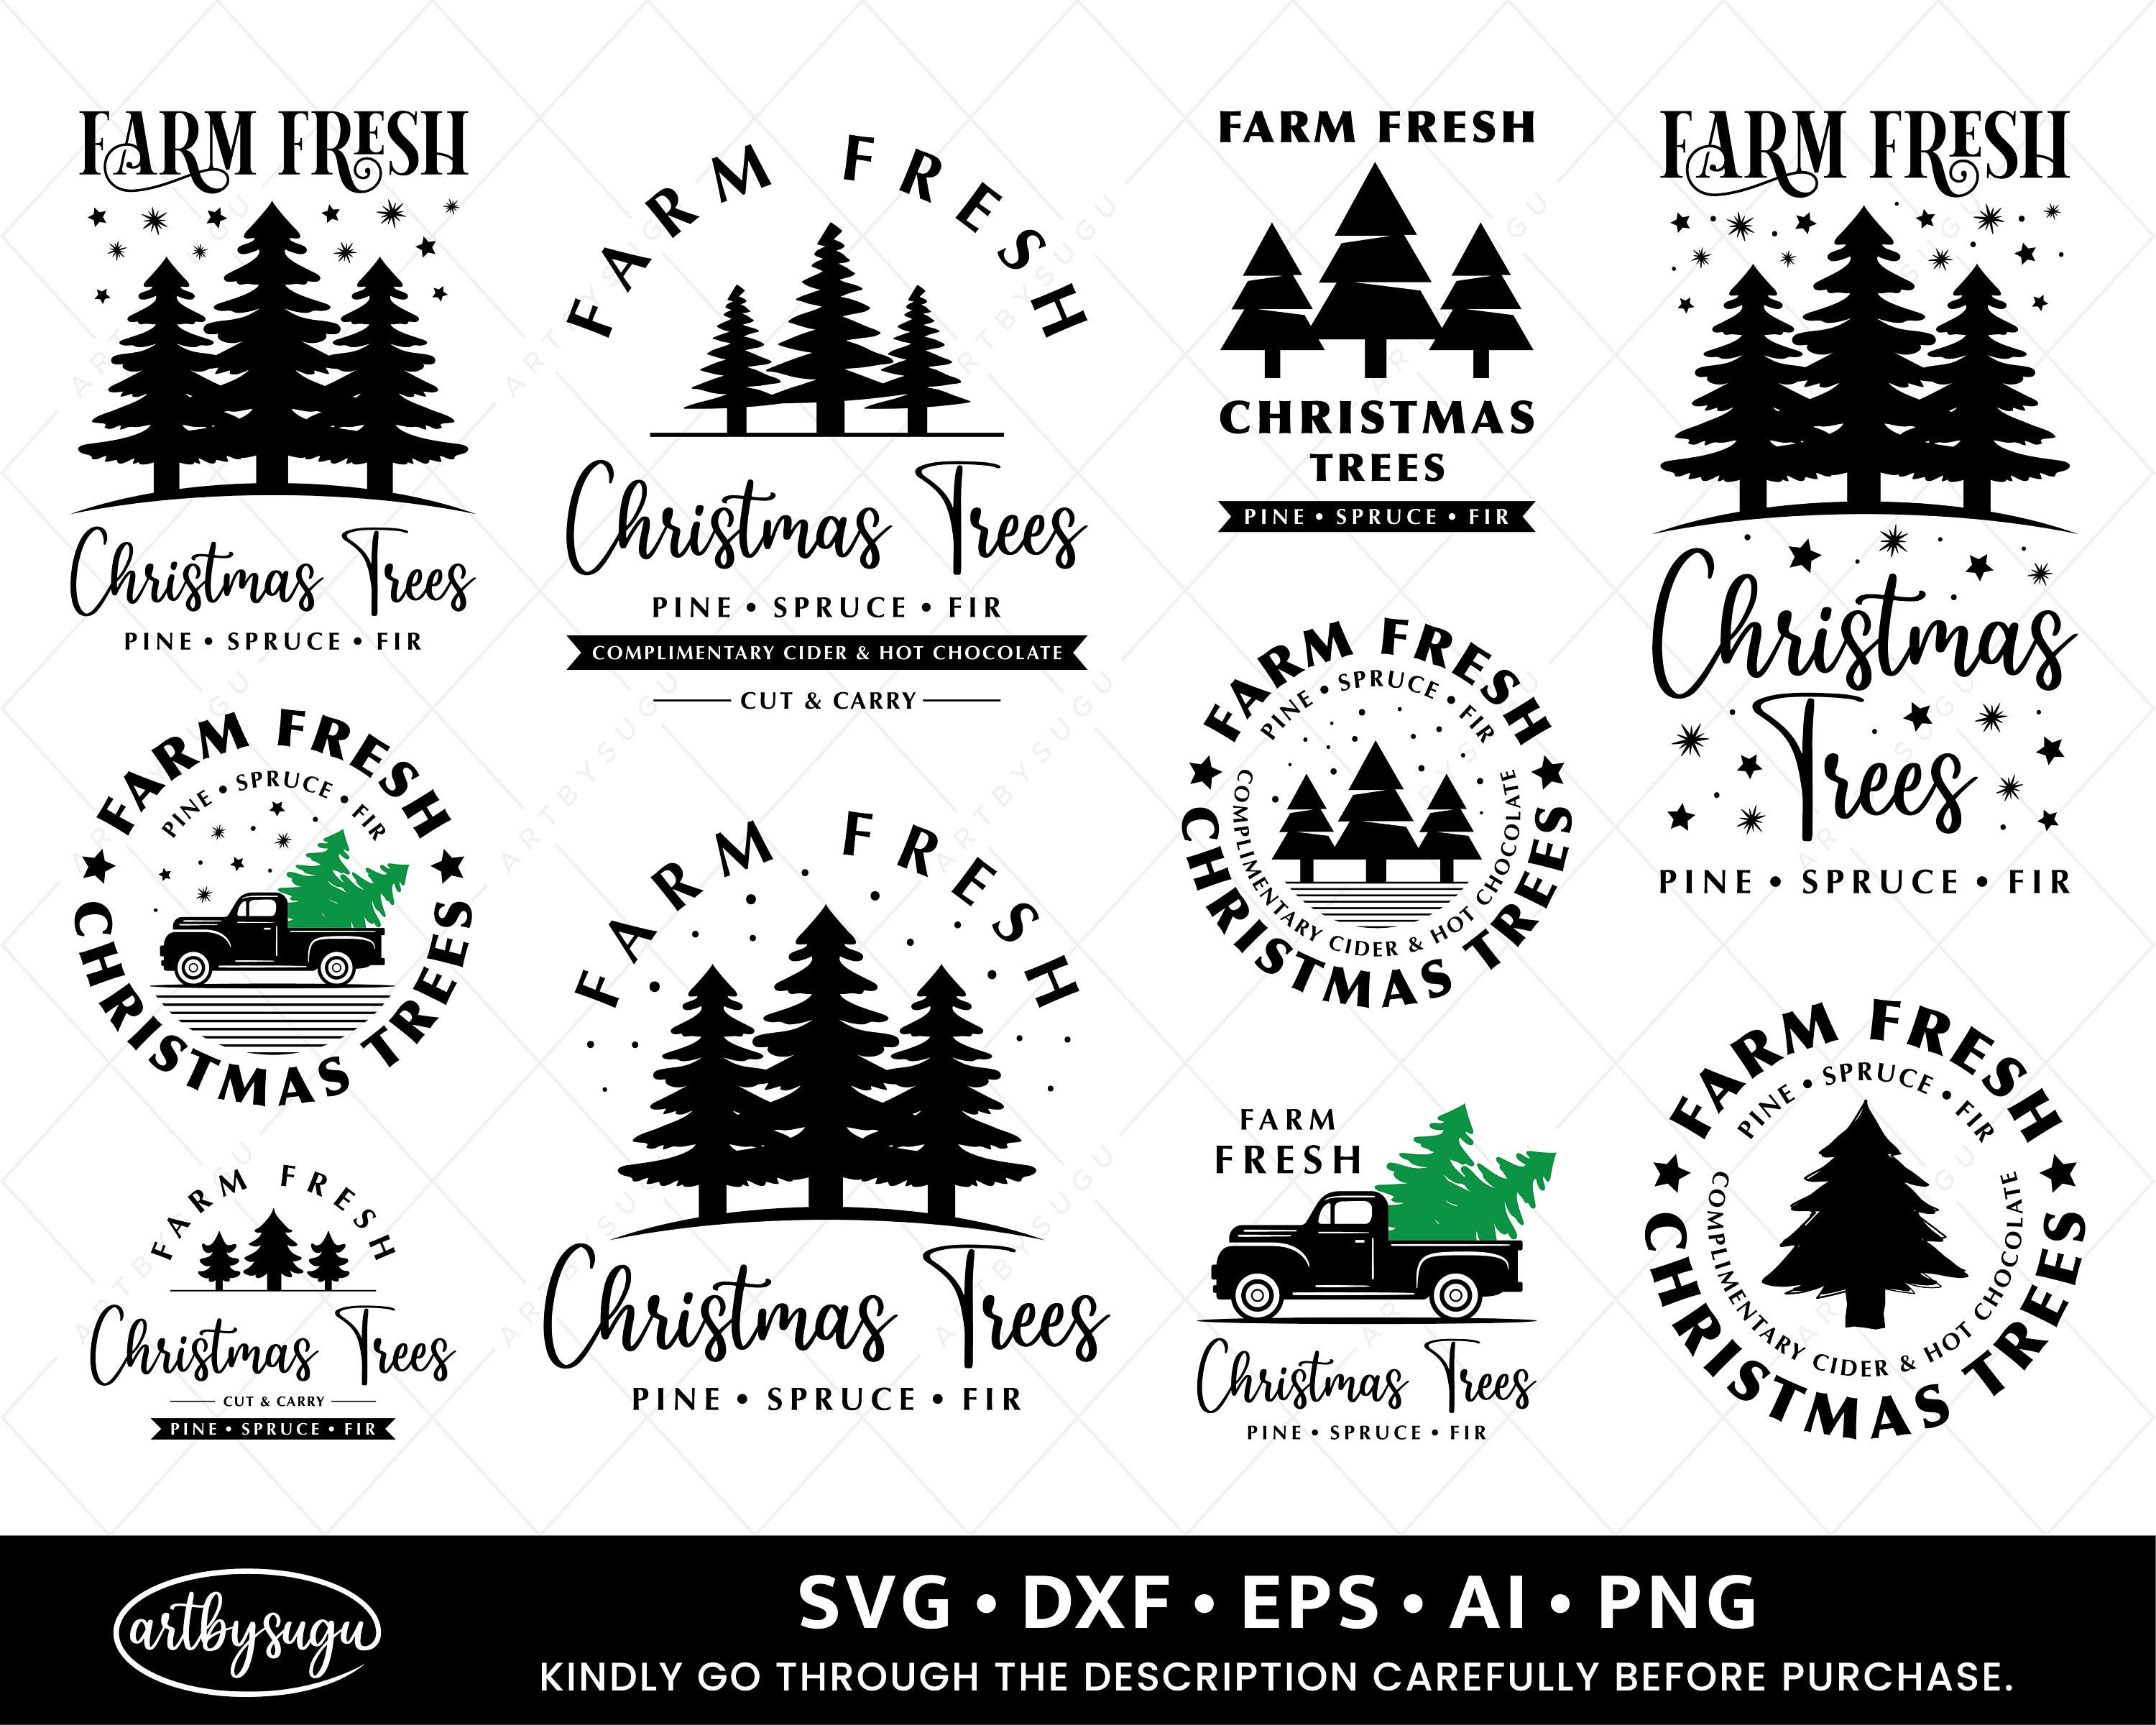 Farm Fresh Christmas Trees SVG, Retro Christmas SVG, Christmas Shirt SVG, Christmas Tree Farm Svg, Farmhouse Christmas, Svg file for Cricut